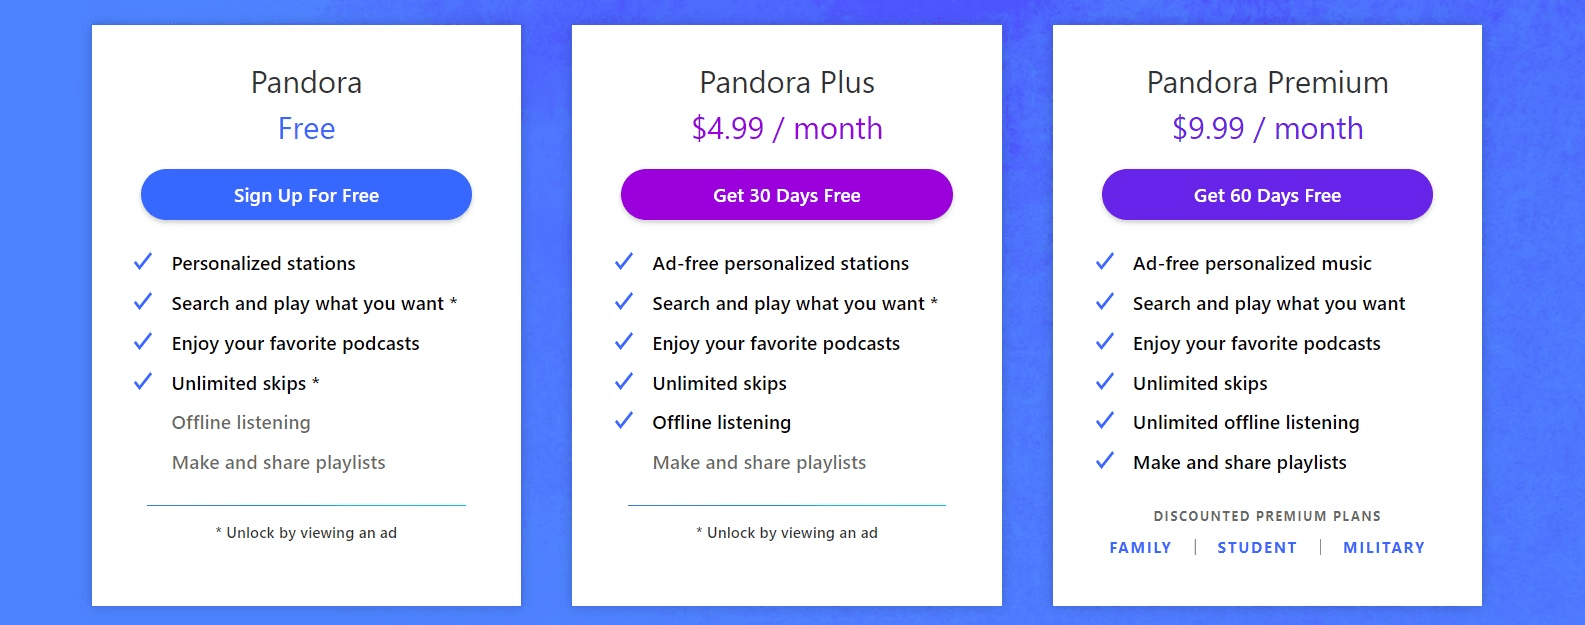 Pandora plans and prices